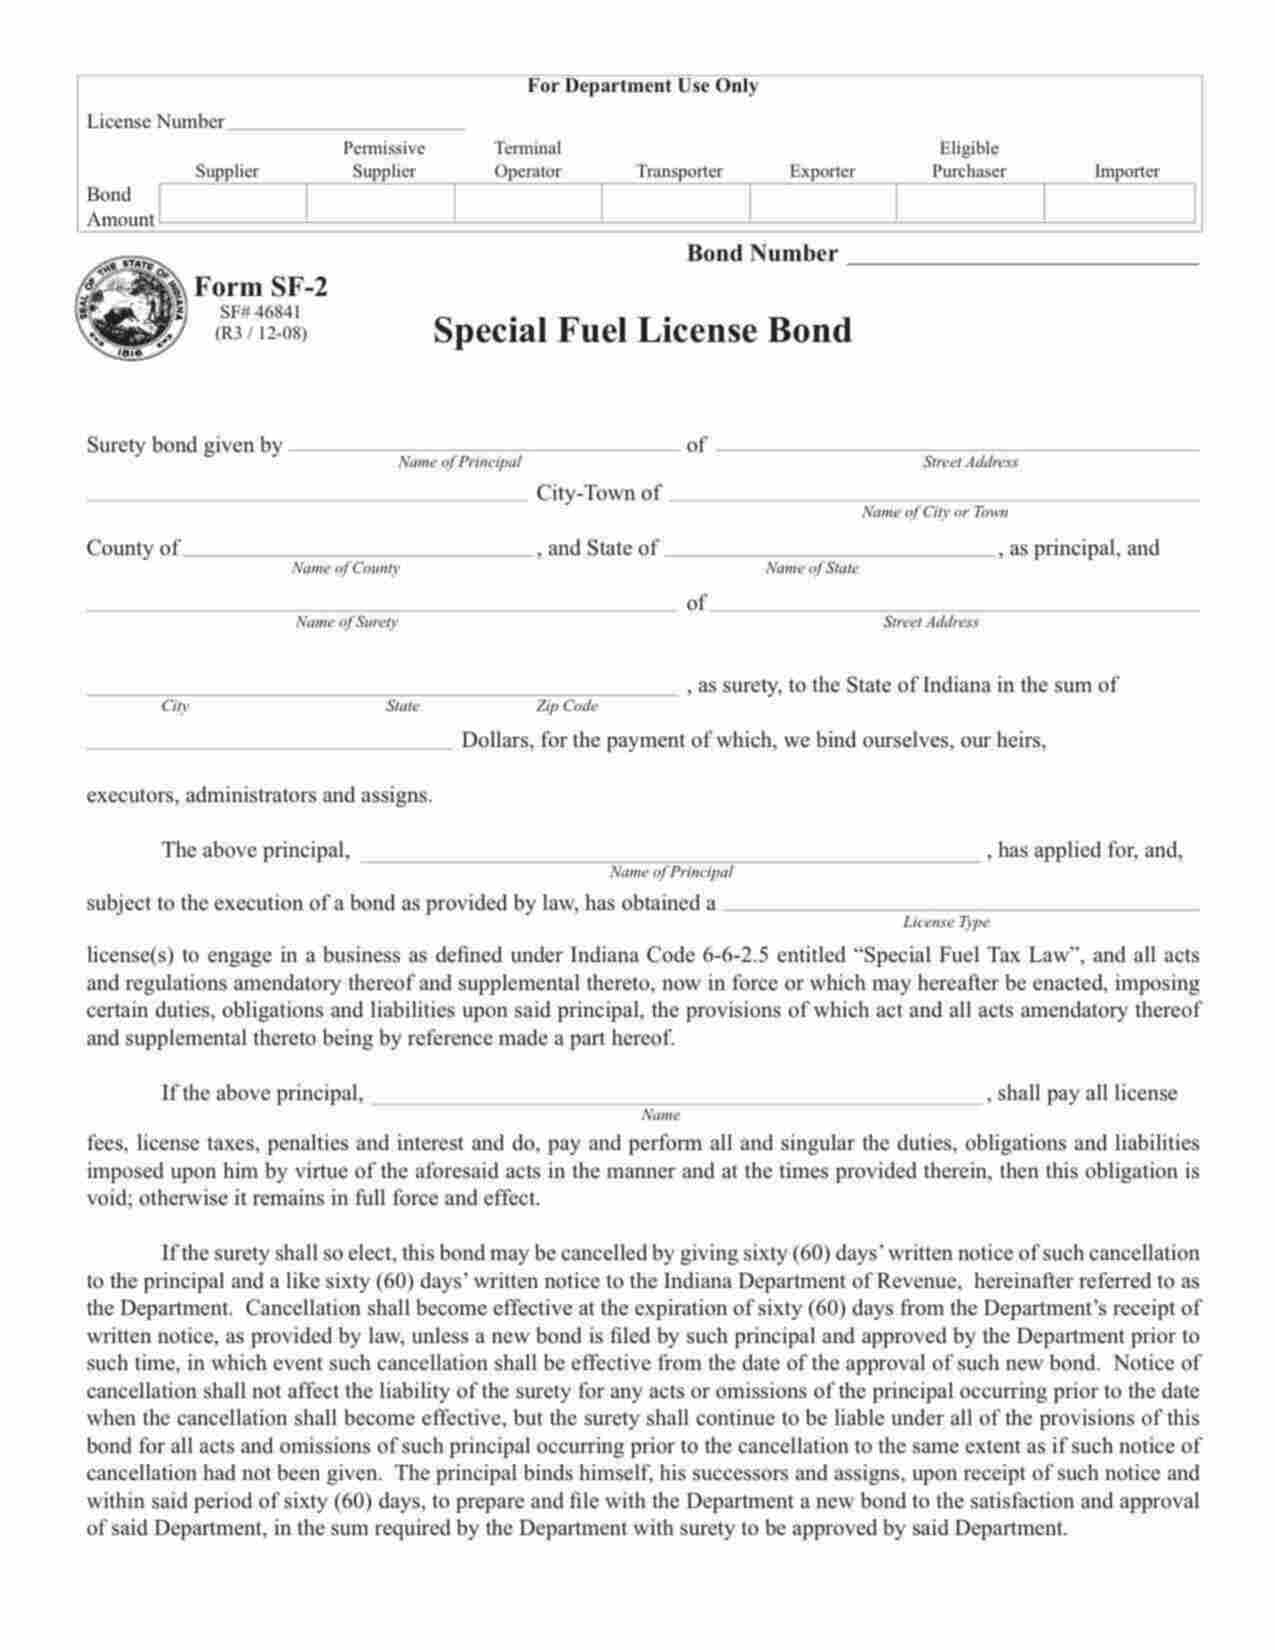 Indiana Special Fuel License - Importer Bond Form